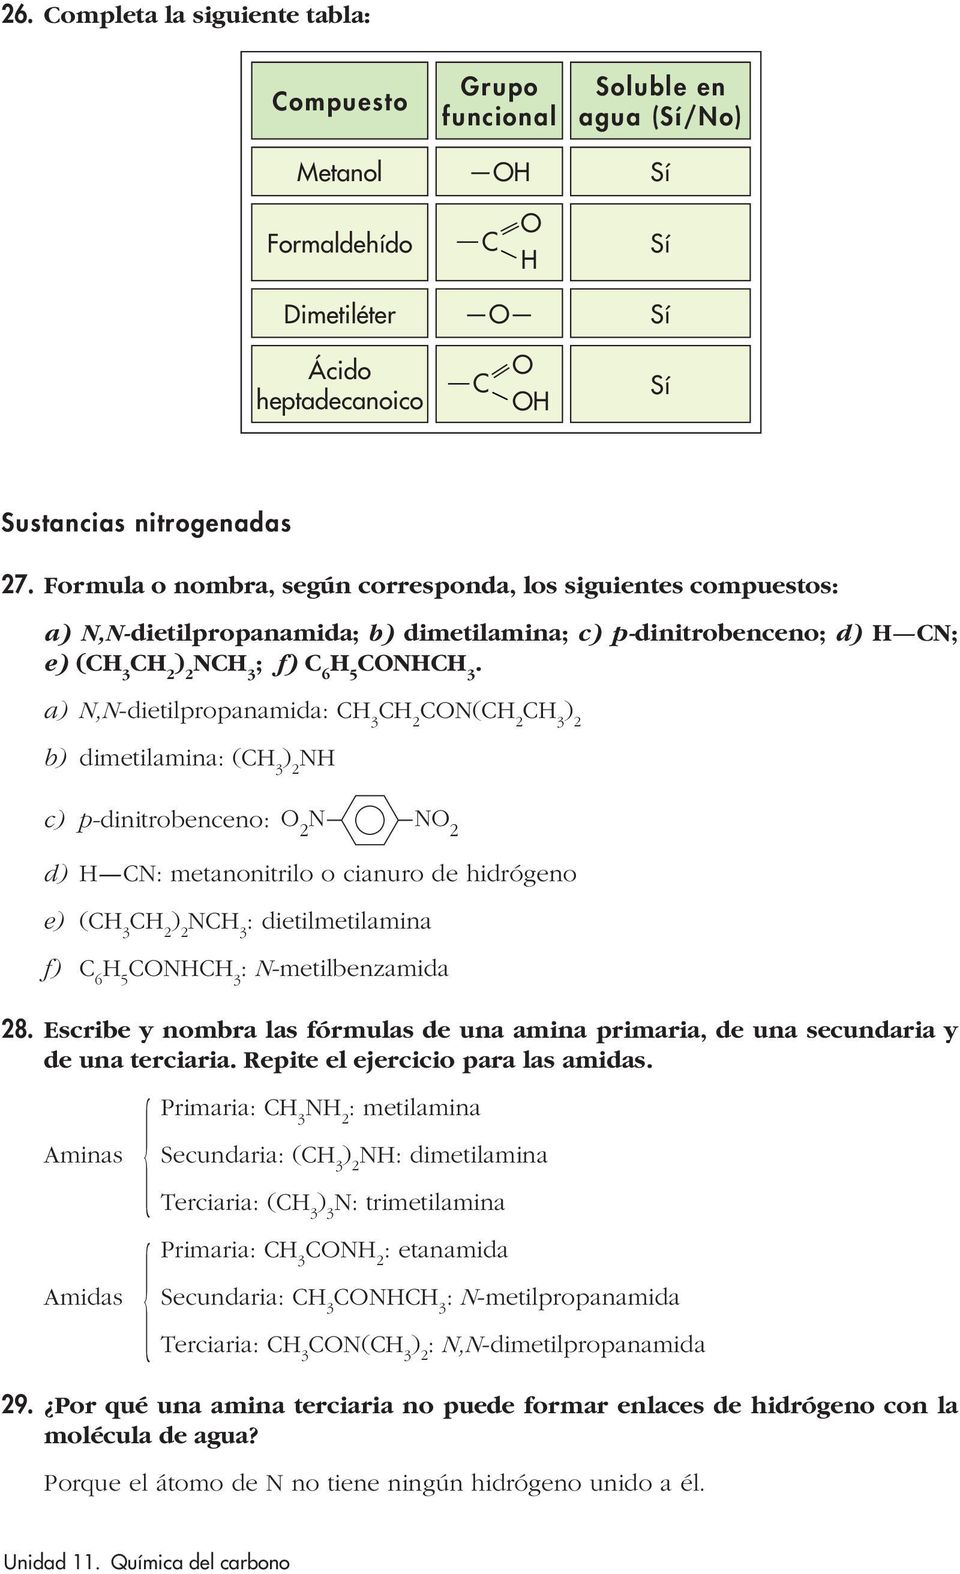 a) N,N-dietilpropanamida: N( b) dimetilamina: ( N c) p-dinitrobenceno: 2 N N 2 d) N: metanonitrilo o cianuro de hidrógeno e) ( N : dietilmetilamina f) 6 5 N : N-metilbenzamida 28.